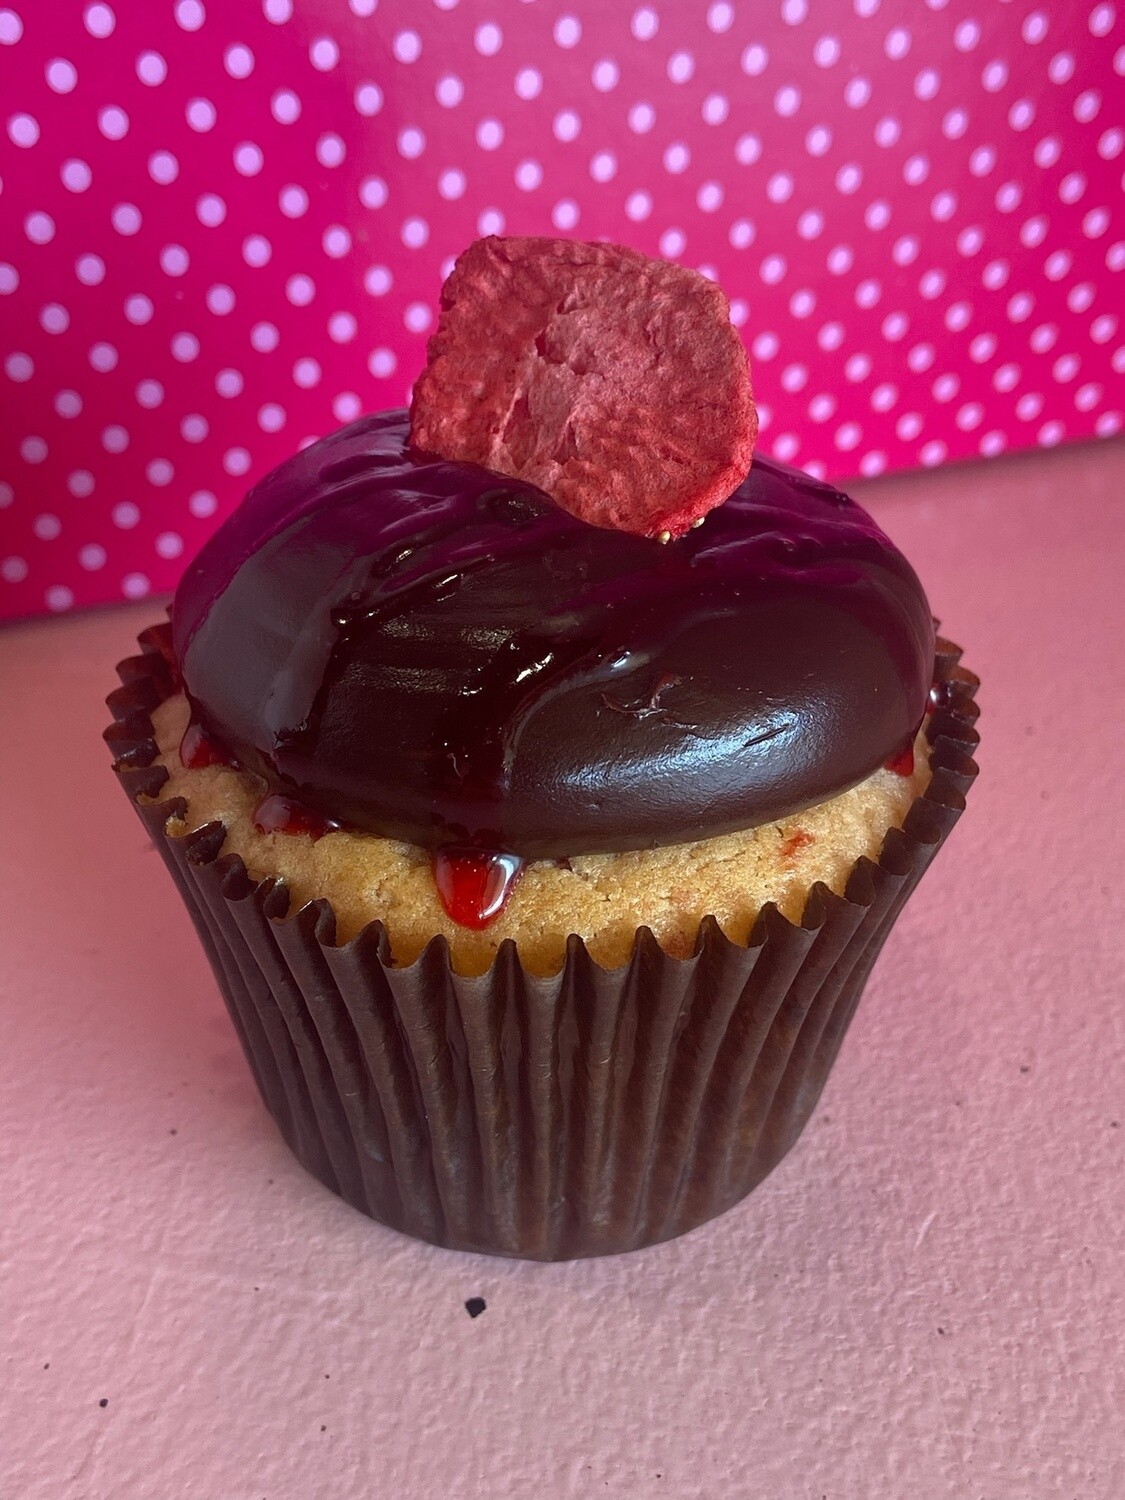 Chocolate Covered Strawberry Cupcake - Wednesday